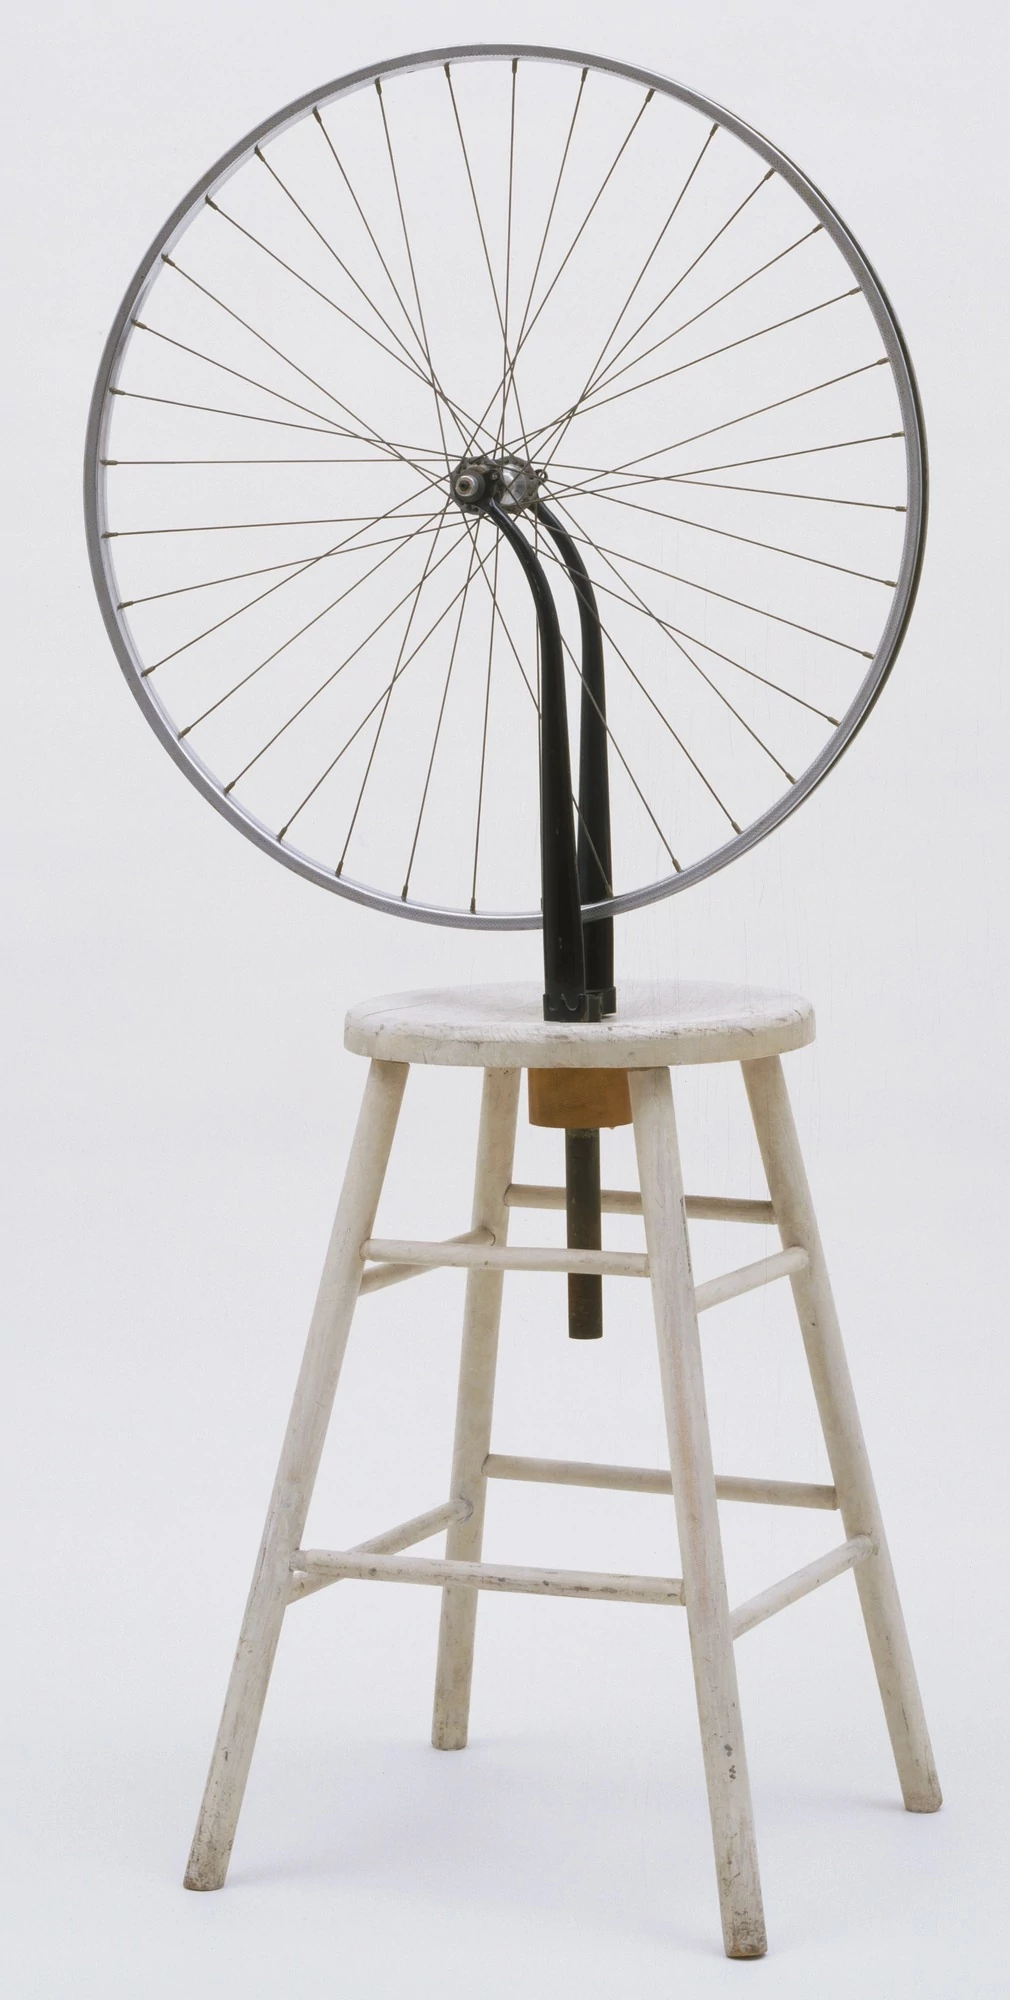 Bicycle Wheel, Marcel Duchamp